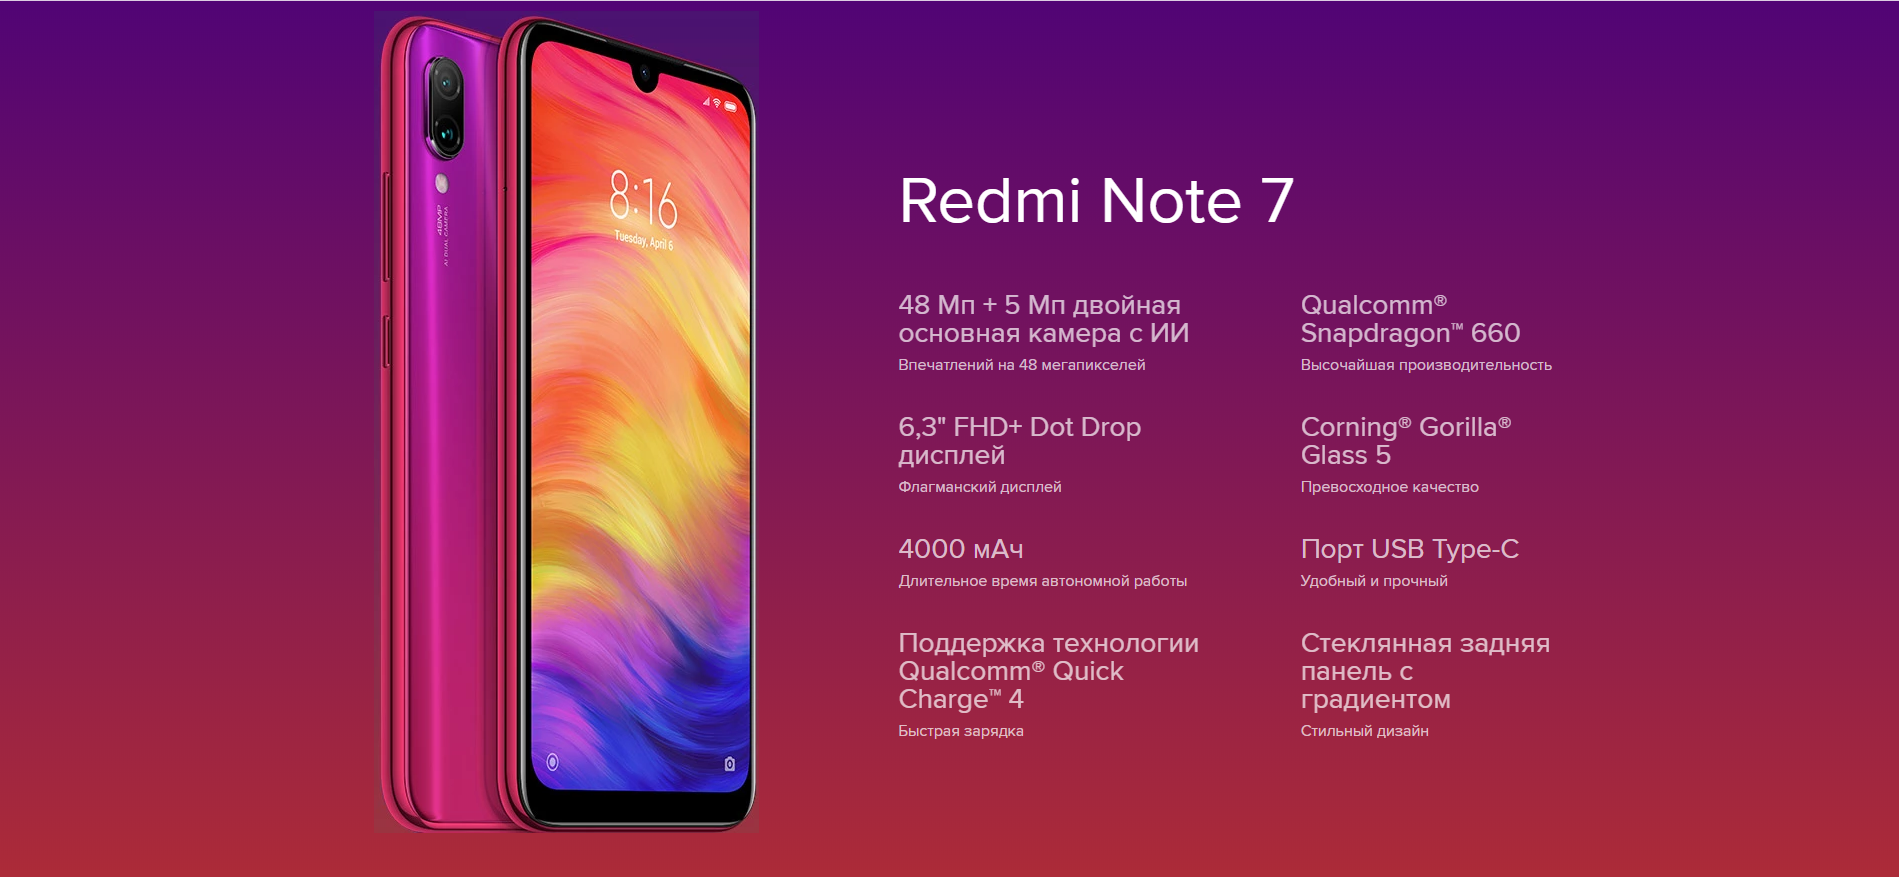 Обзор доступного смартфона redmi note 5 pro с хорошими комплектующими